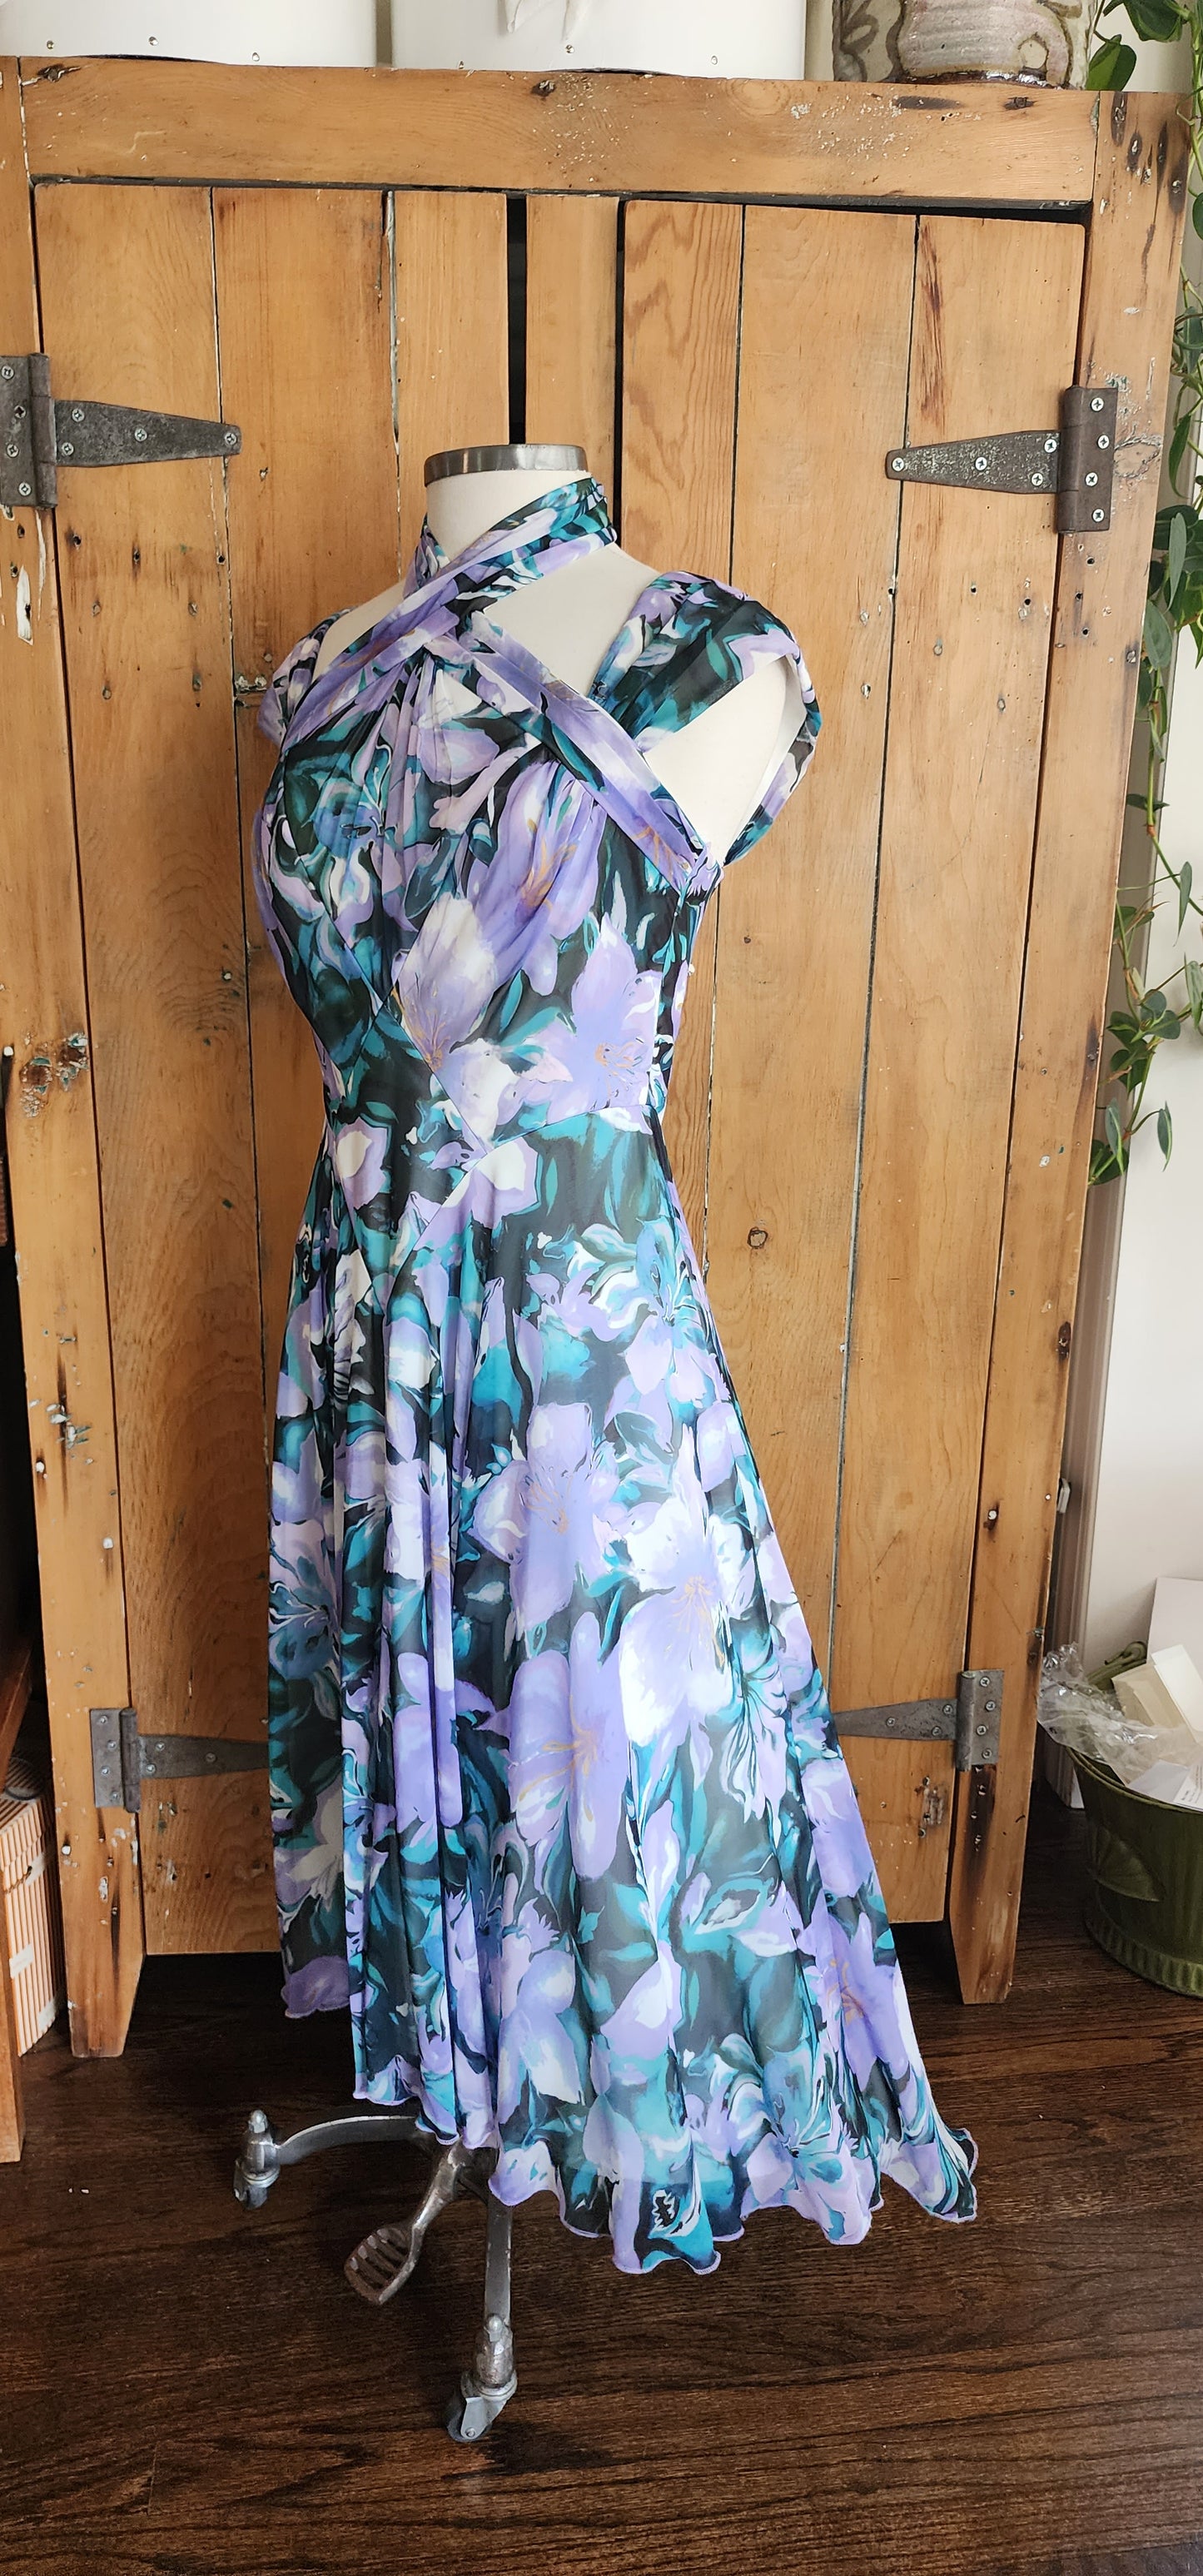 Tadashi Shoji Dress Lilac Floral Print Halter Top Asymmetrical Top